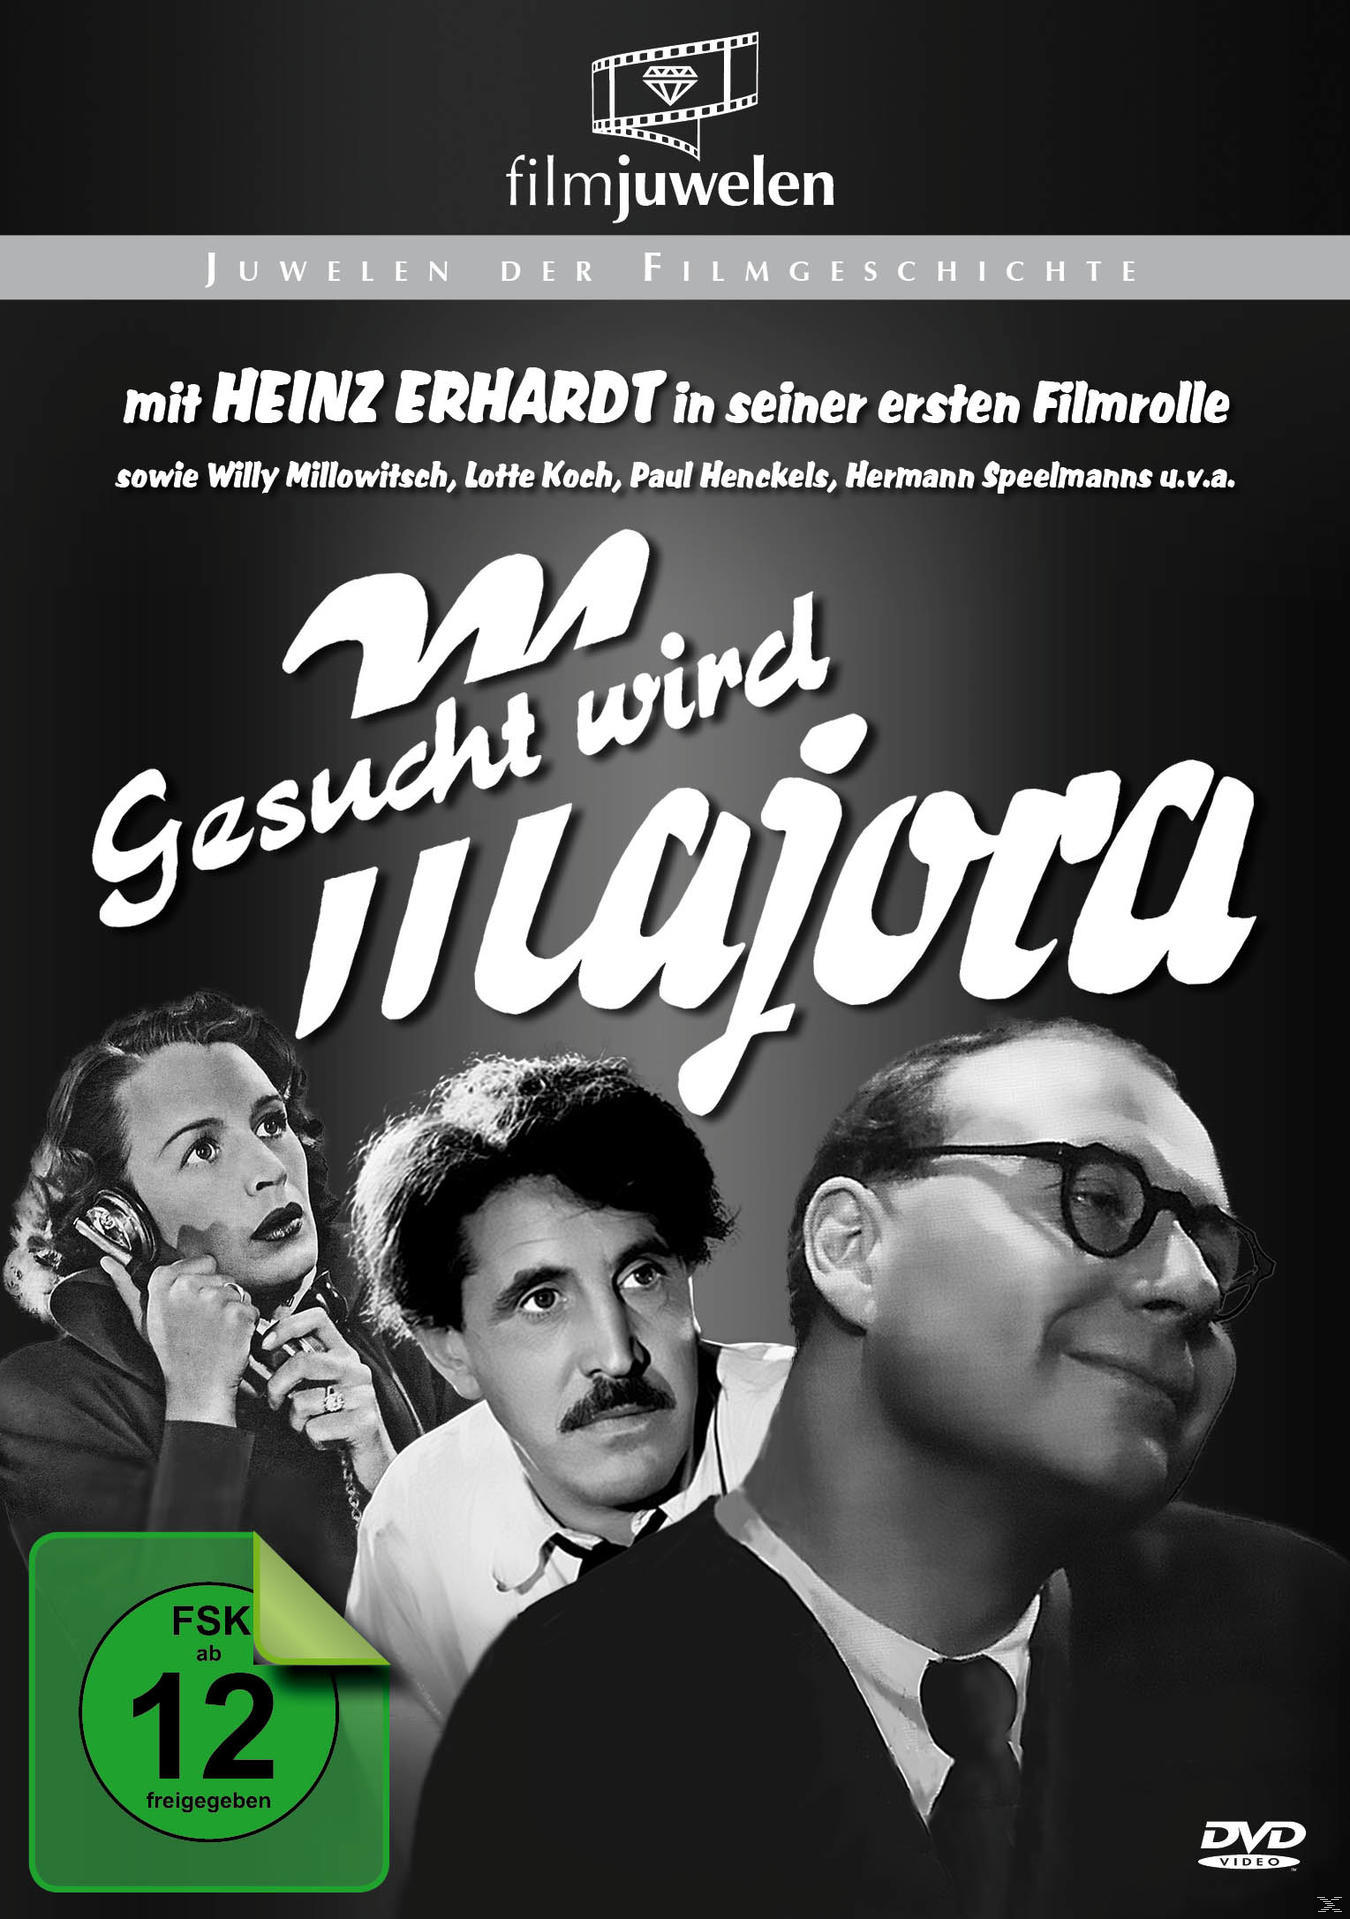 Heinz Erhardt: Majora wird DVD Gesucht